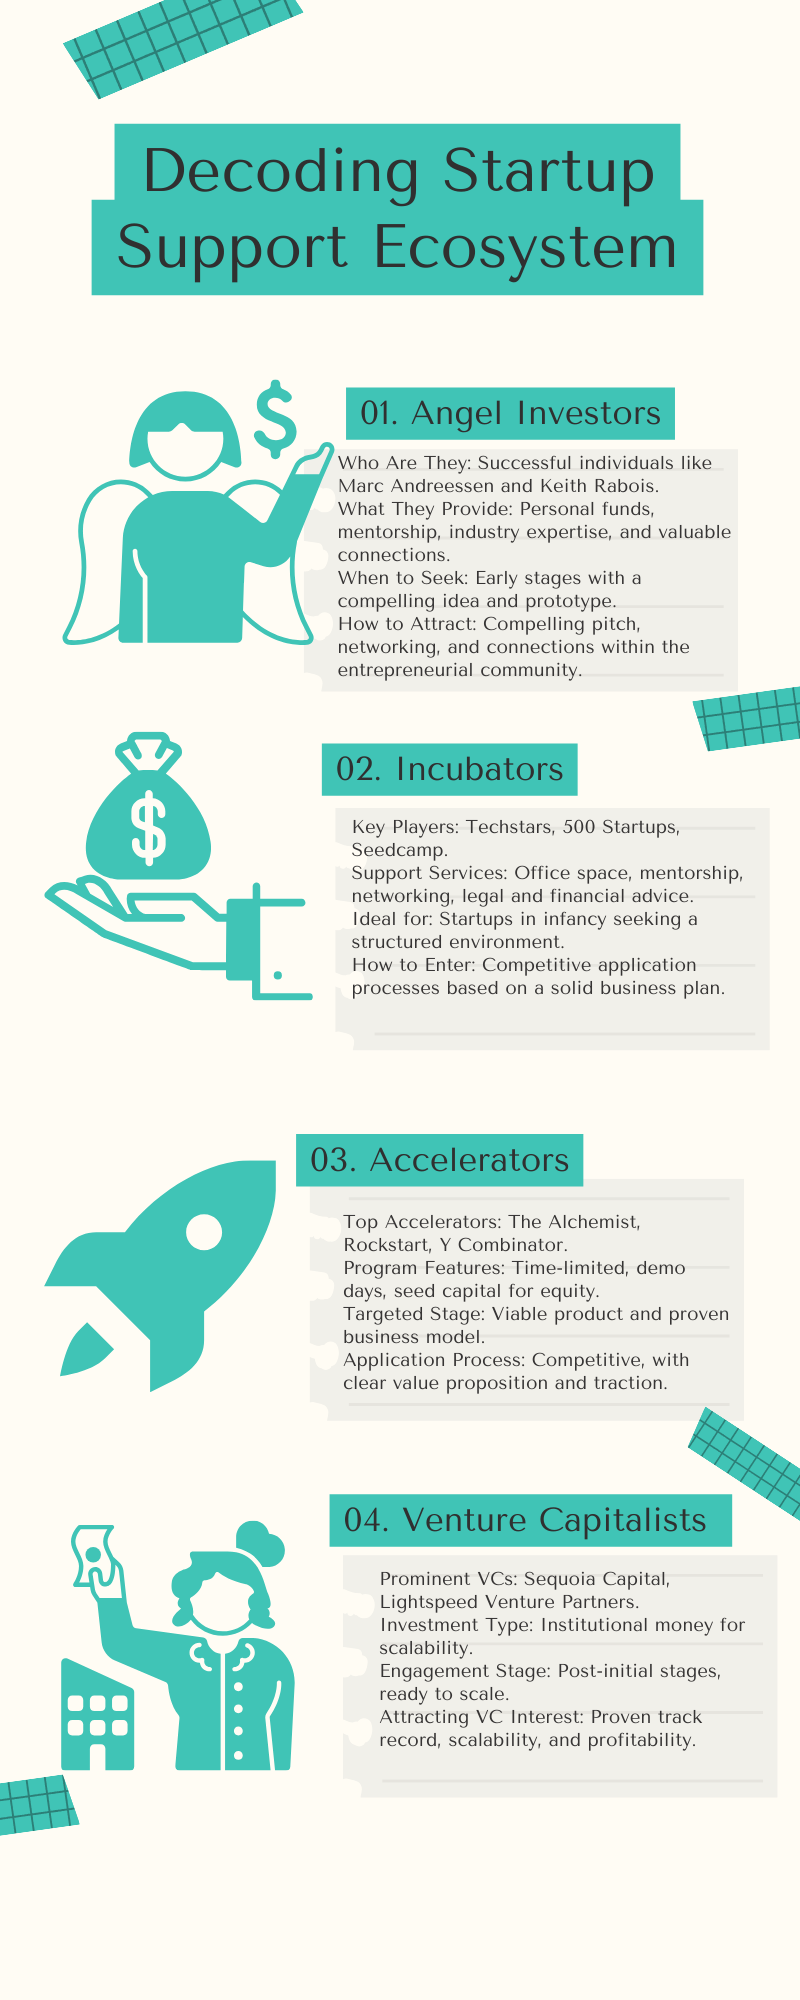 Top 3 differences between Angel Investors, Venture Capitalists, Incubators and Accelerators